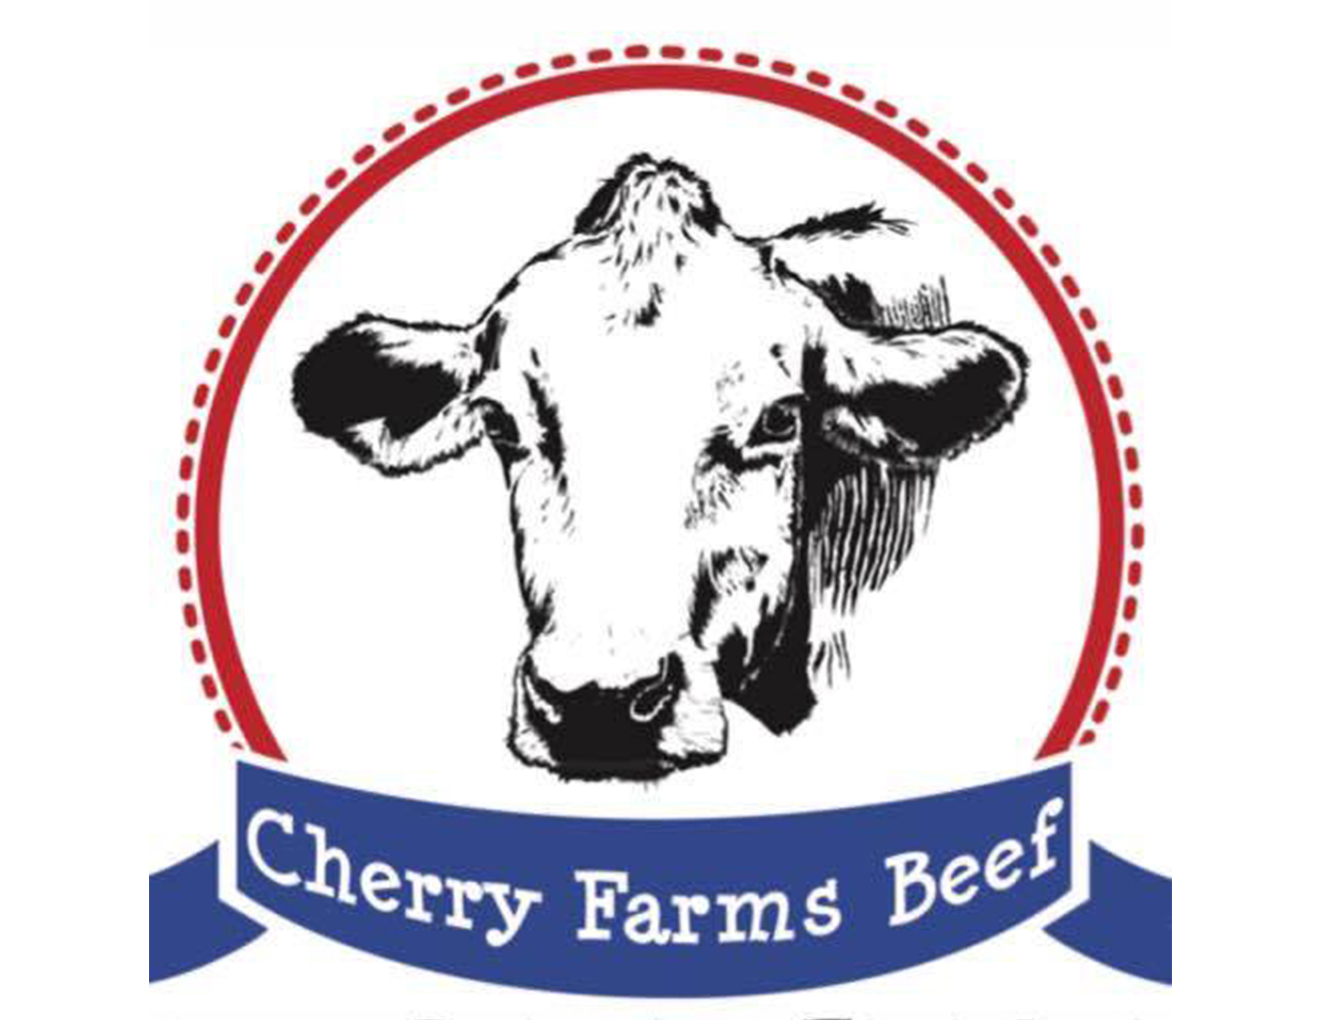 Cherry-Farms-Beef-logo